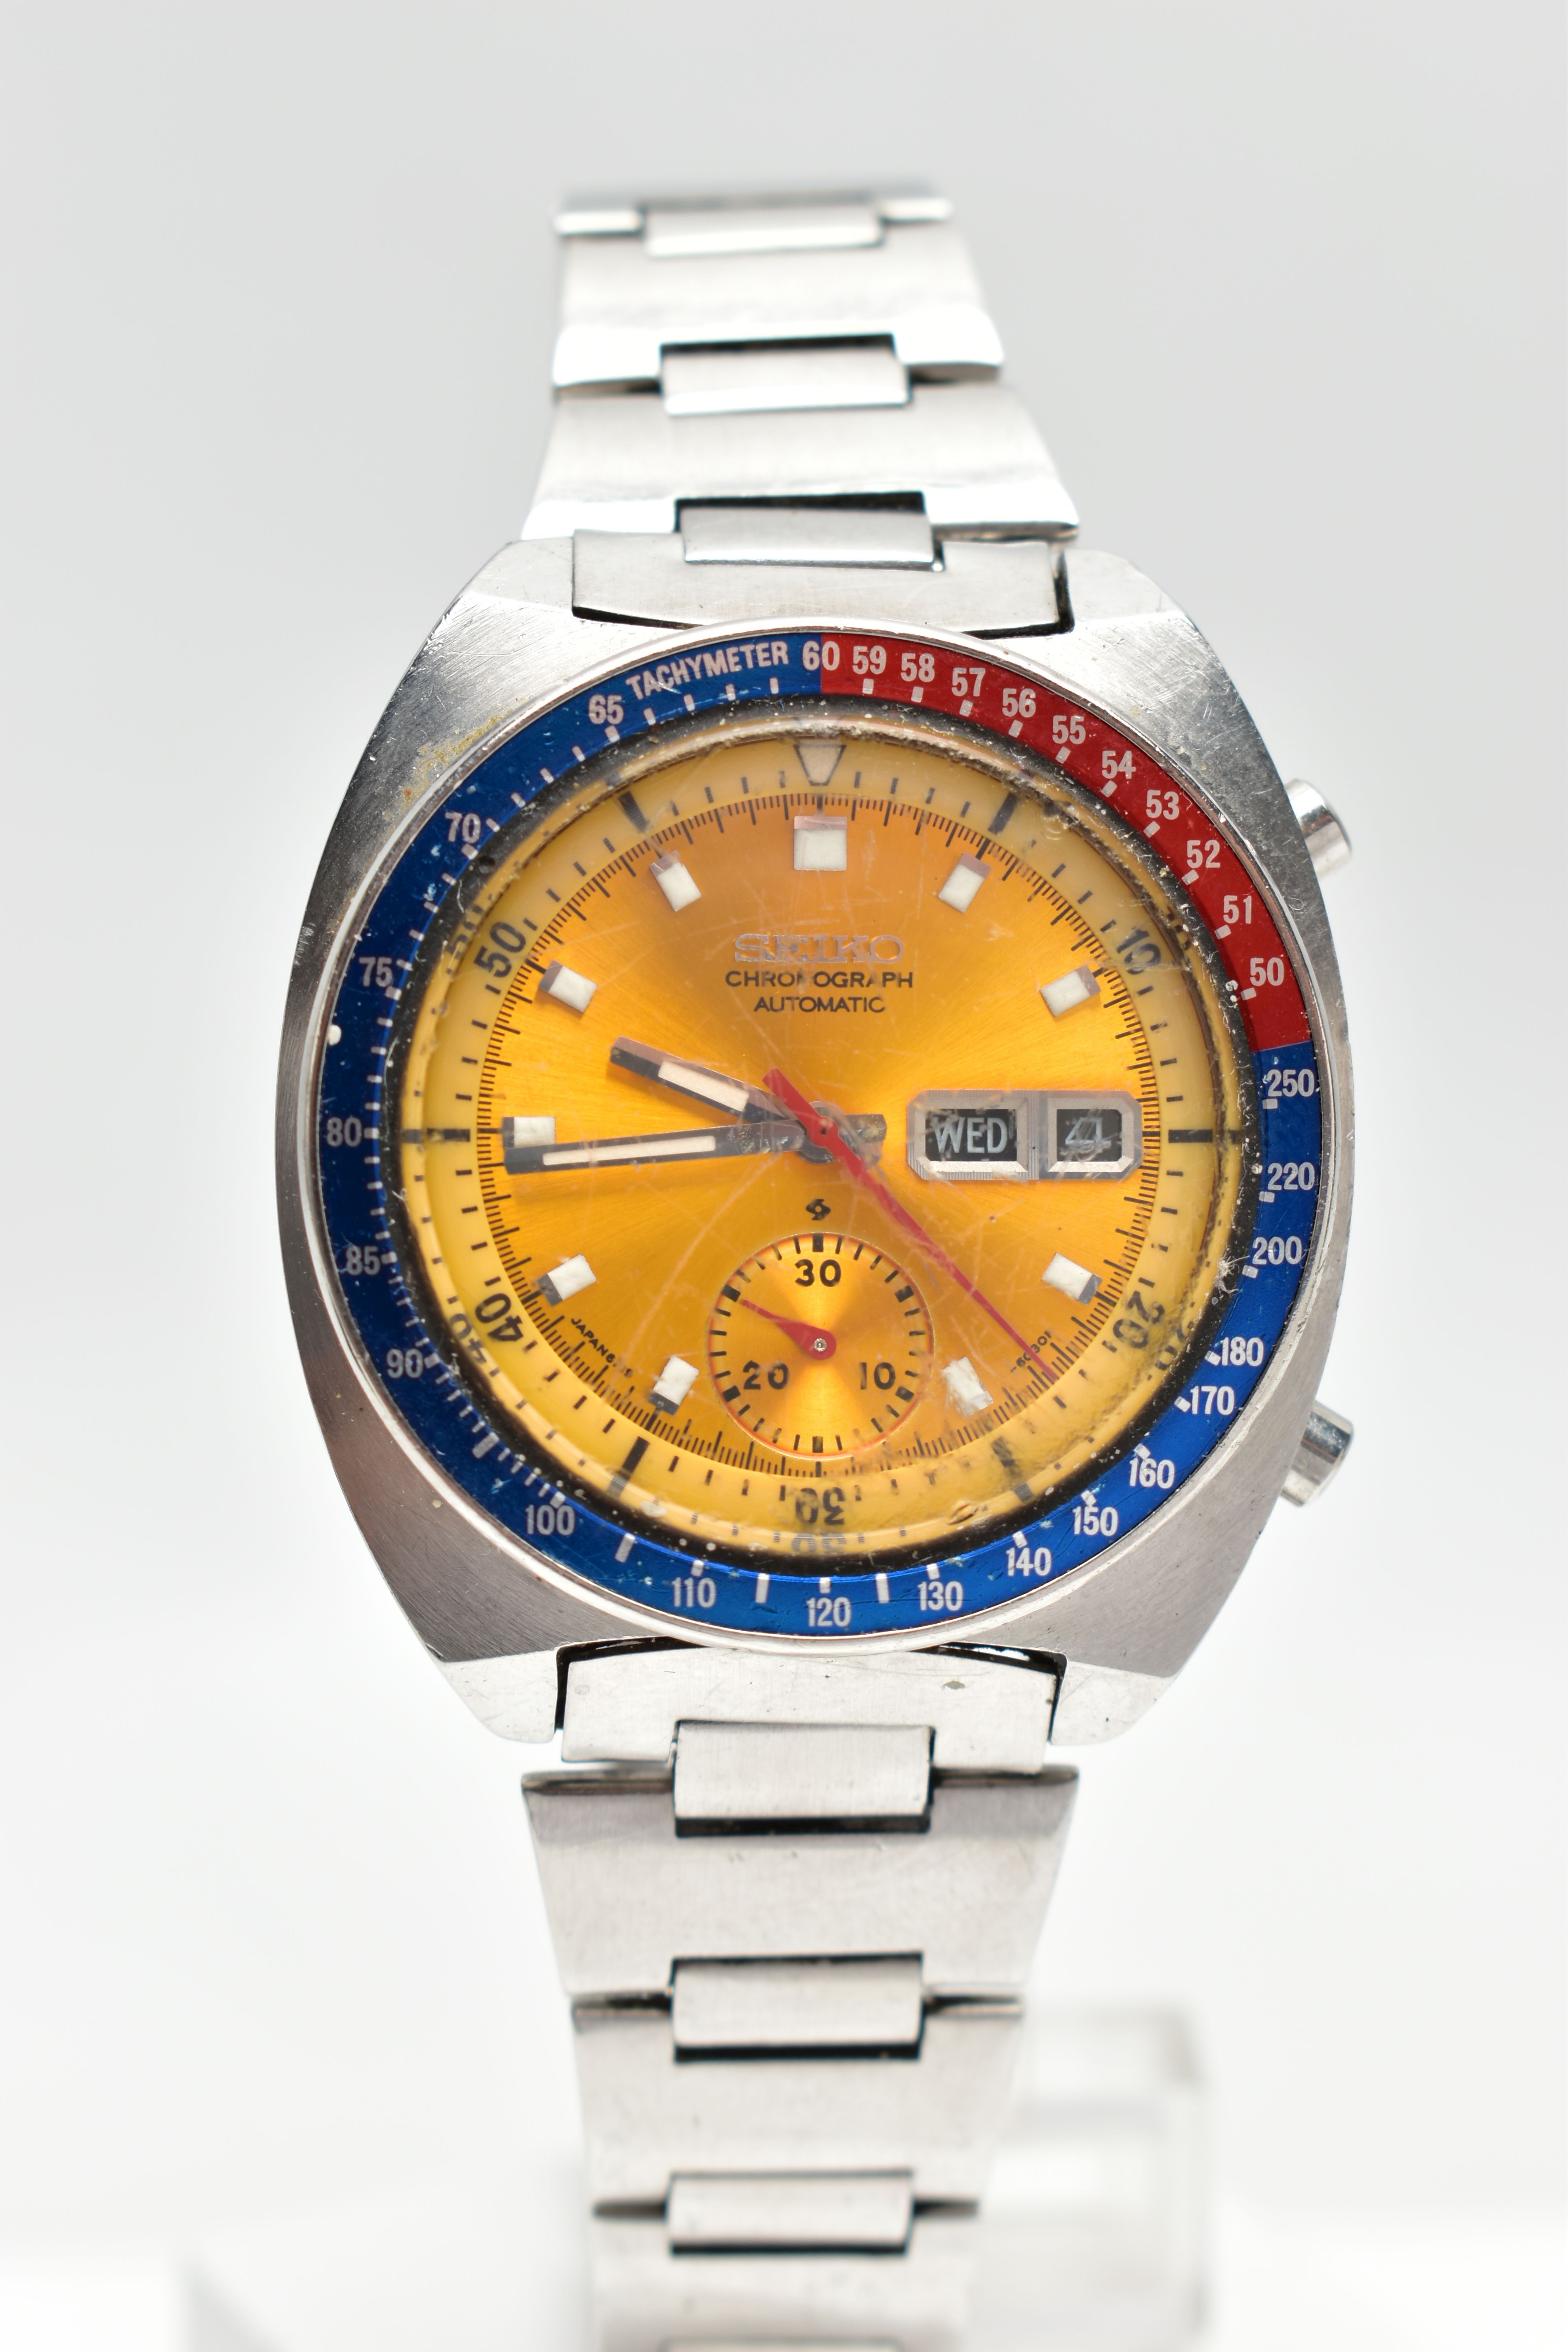 A 'SEIKO' WRISTWATCH, automatic movement, round yellow dial, signed 'Seiko chronograph automatic',